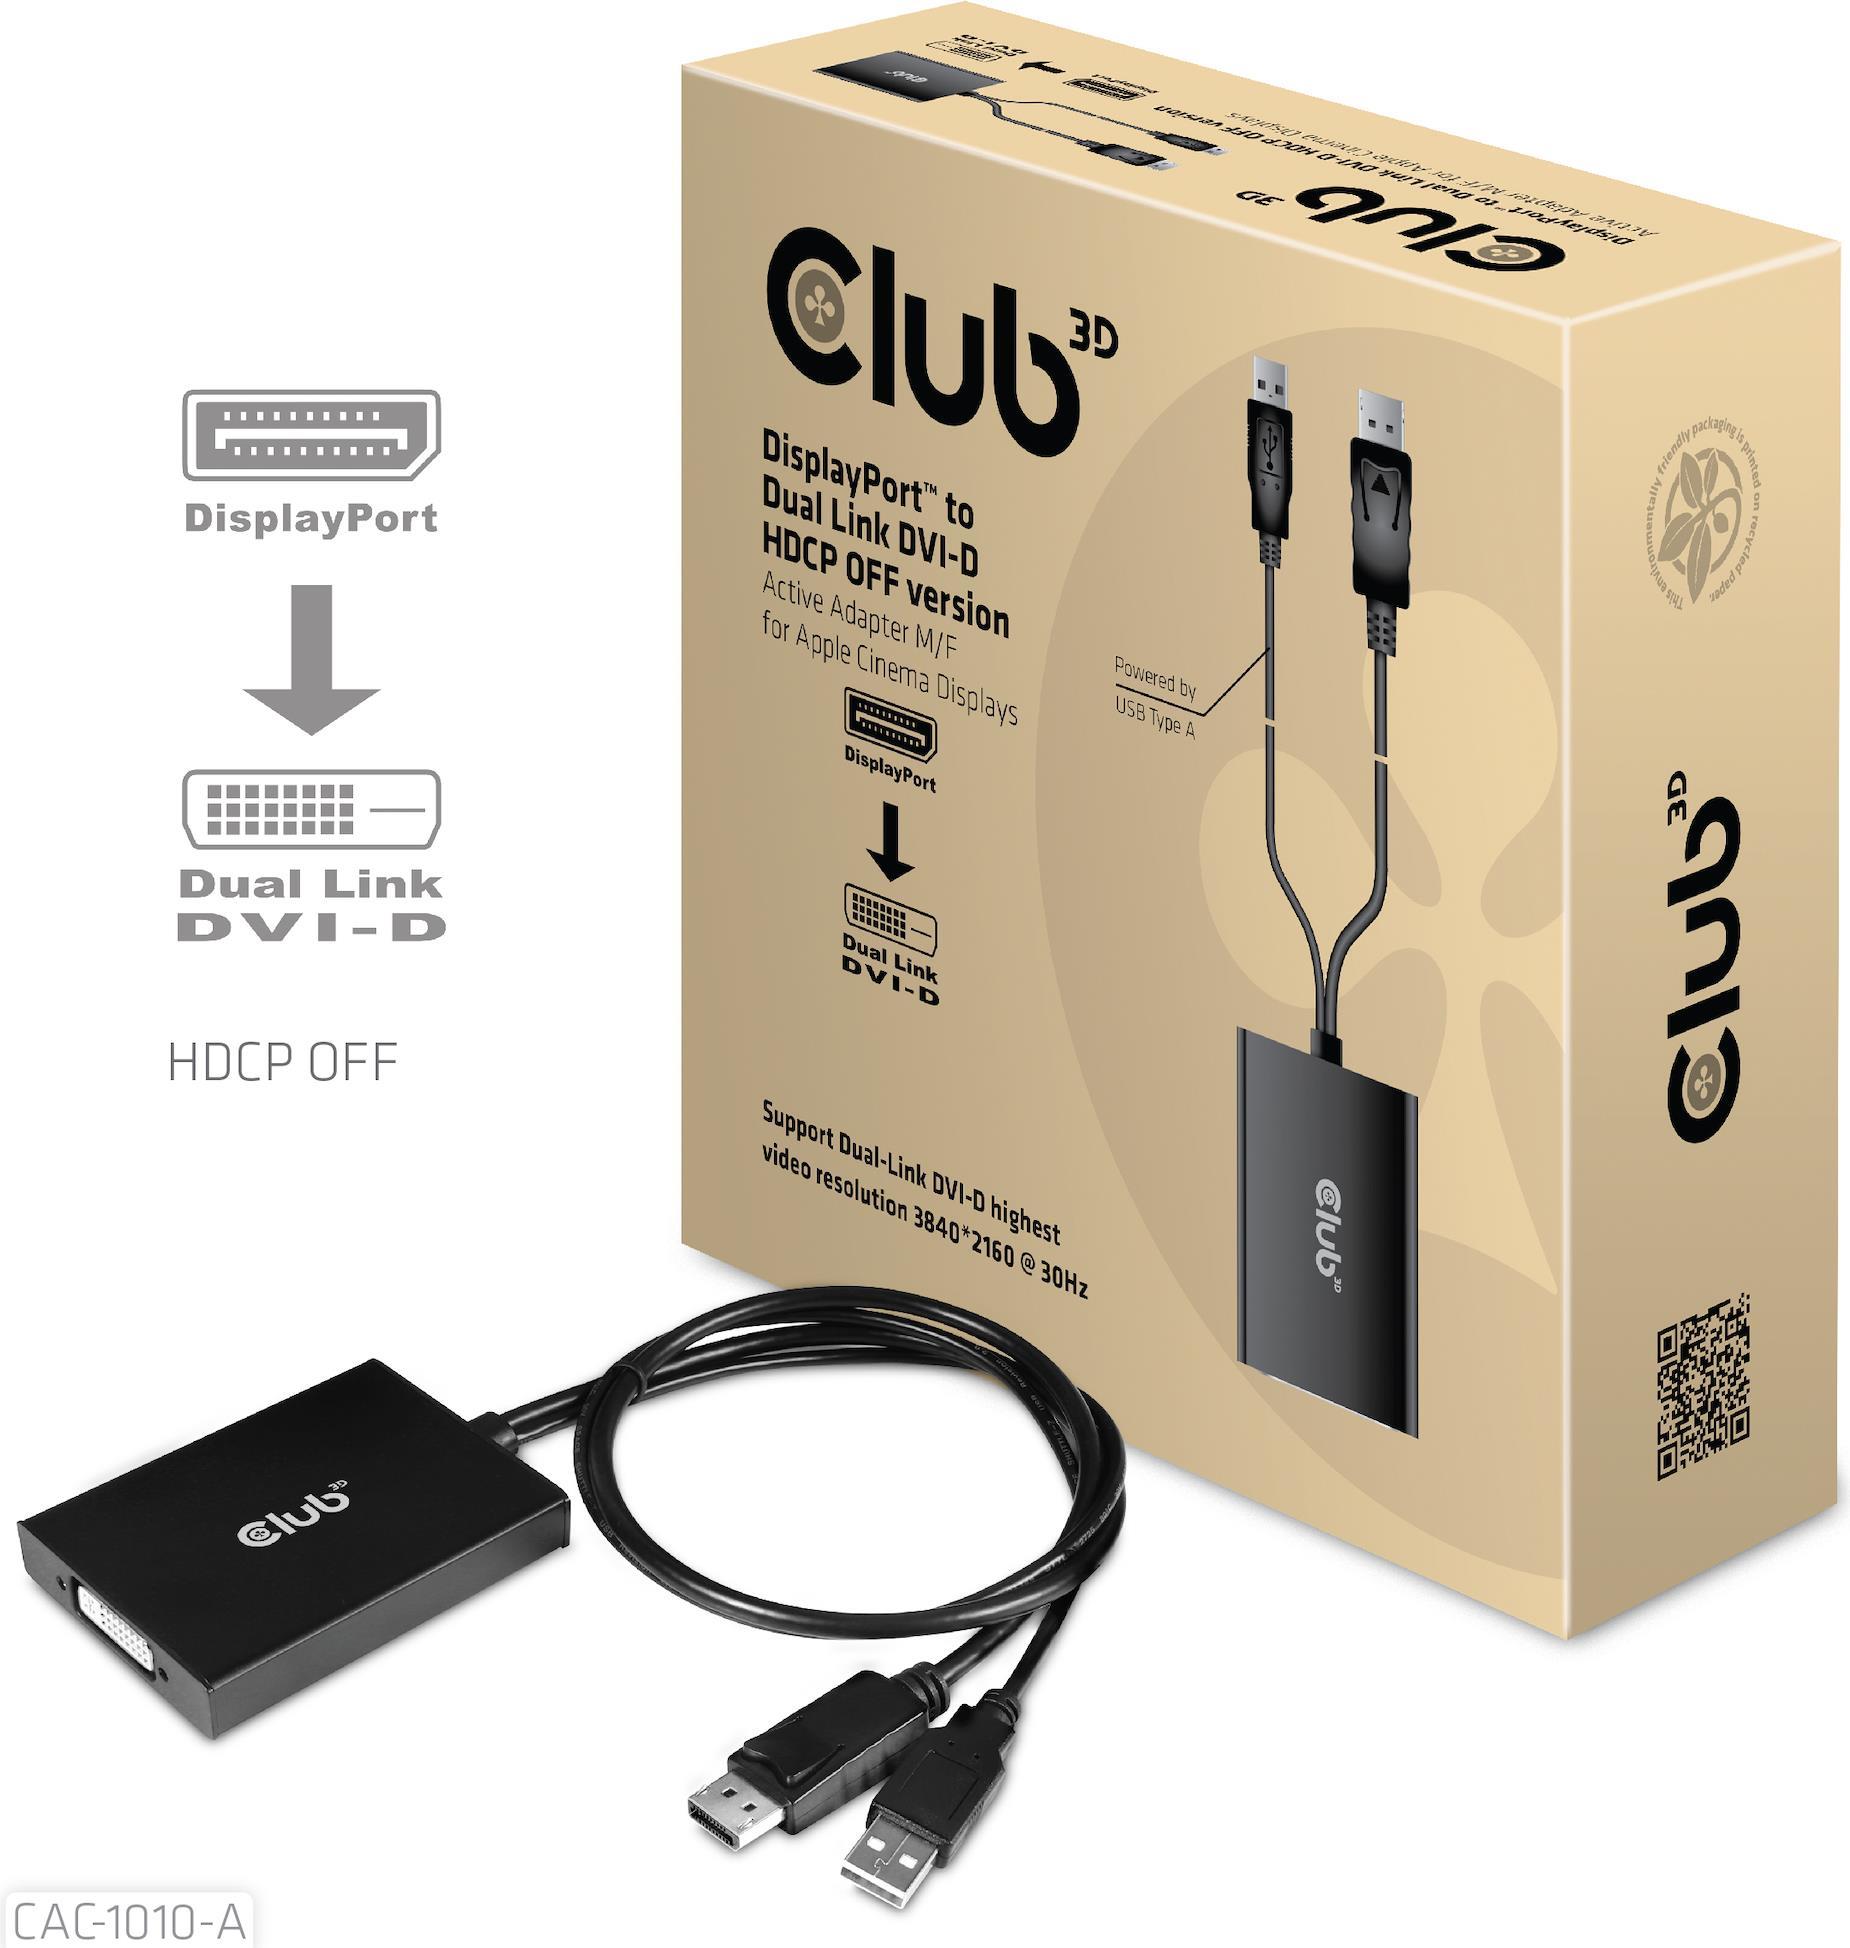 Club 3D DisplayPort/DVI-Adapter (CAC-1010-A)